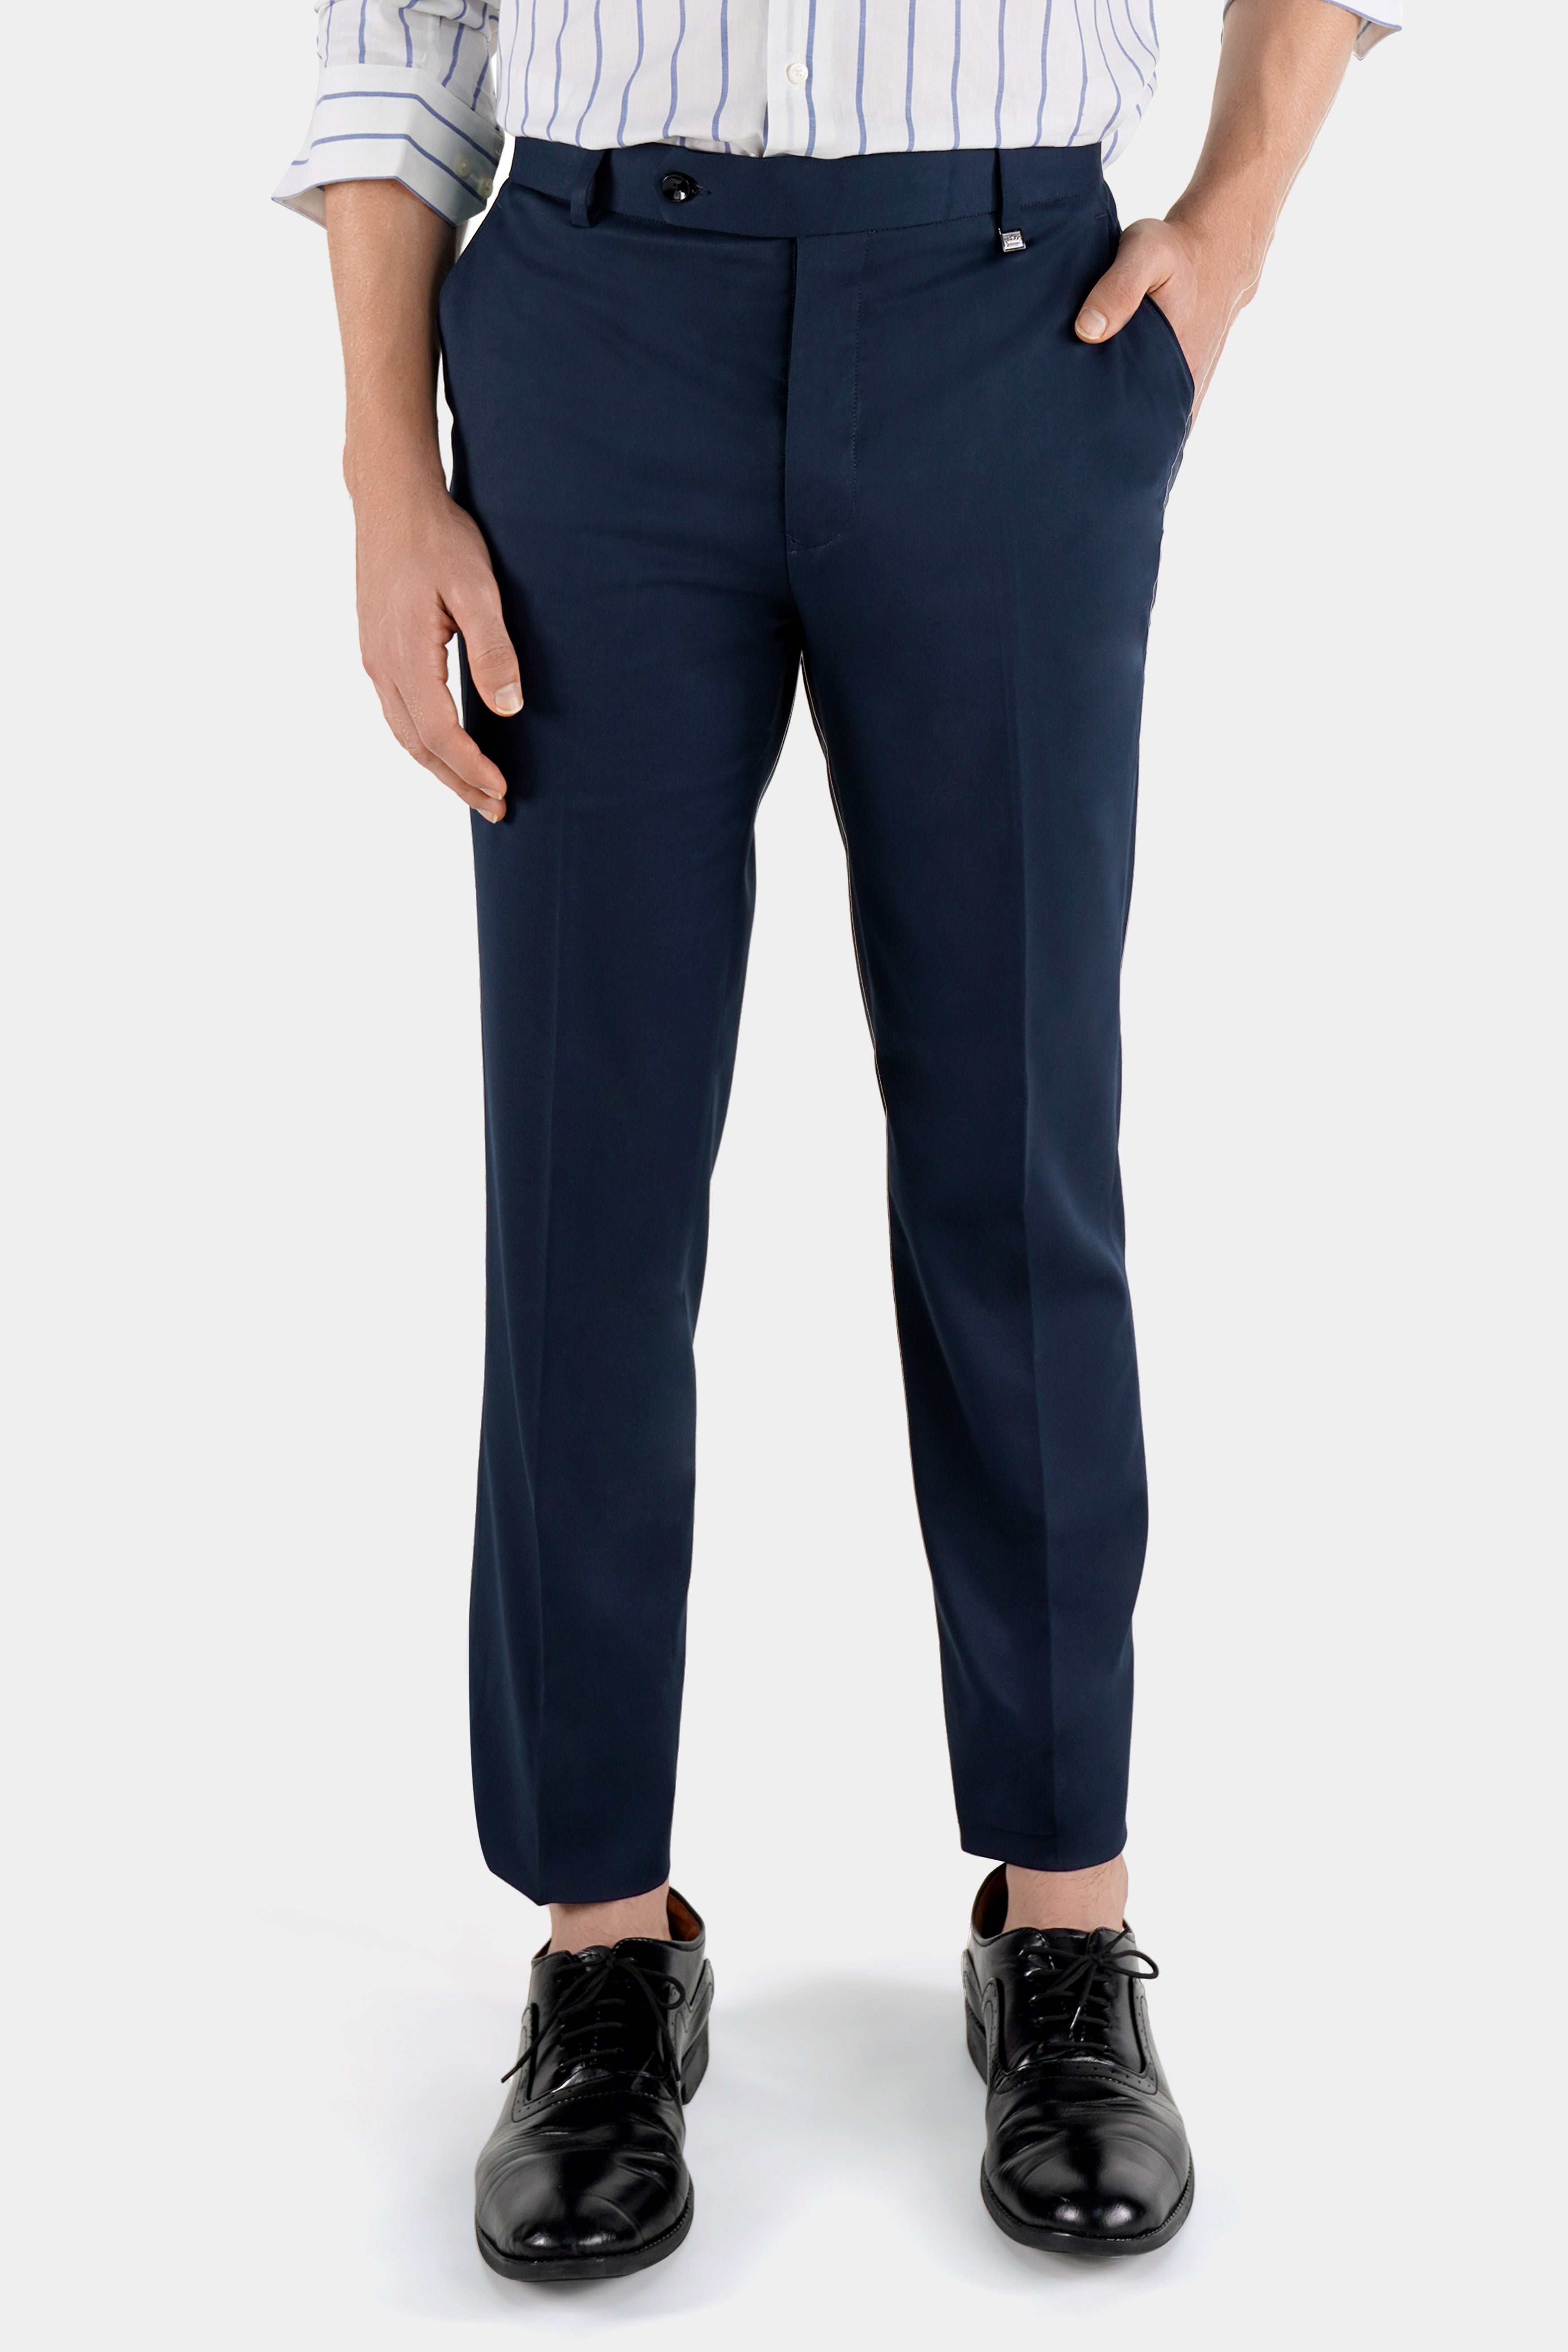 Ethics Enterprise Lycra Blend Designer Latest Trending Formal Trousers For  Man | formal pants | Track